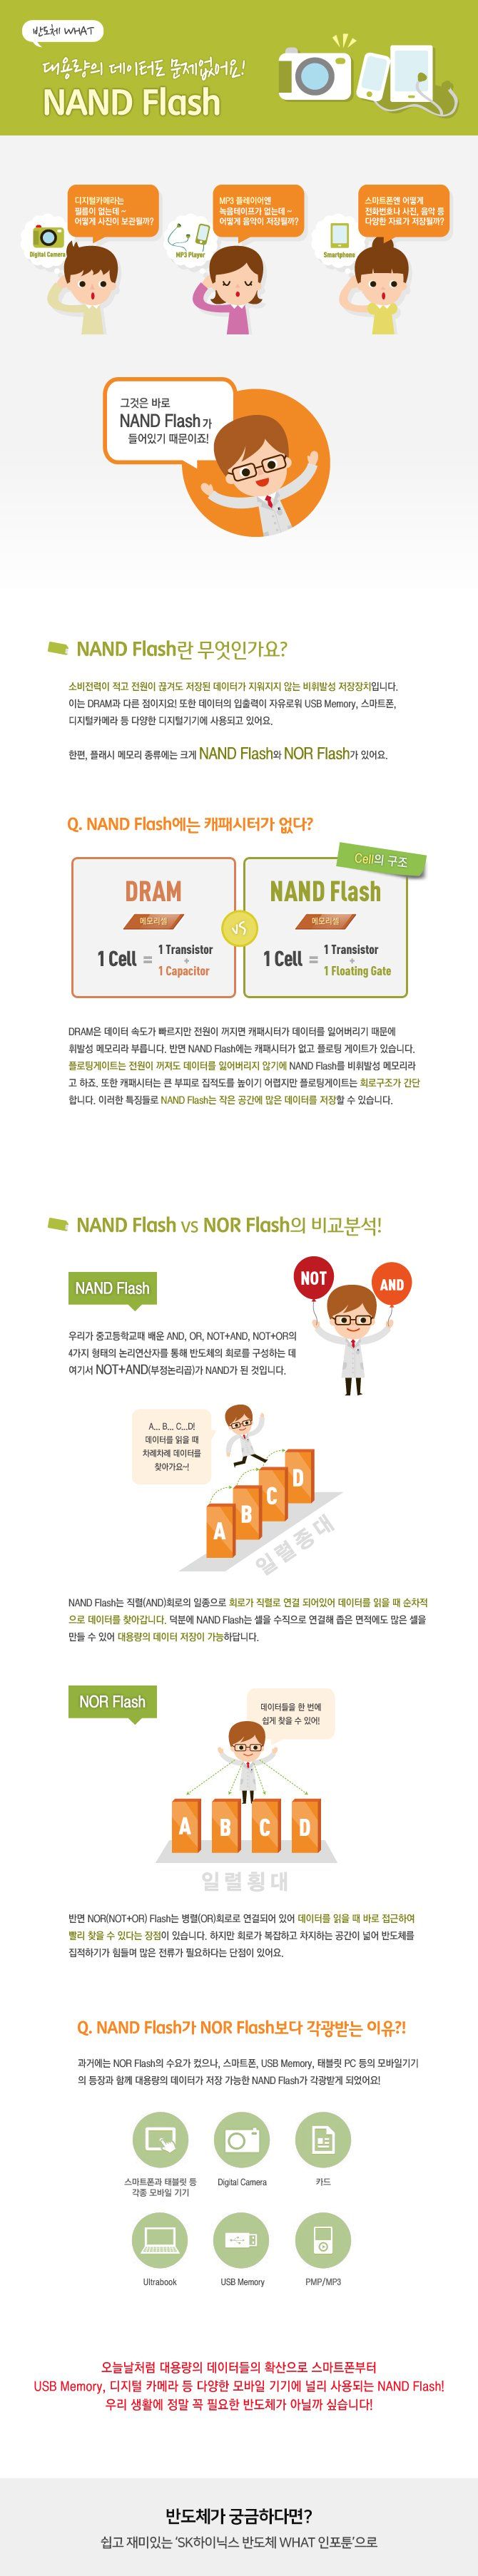 NAND Flash